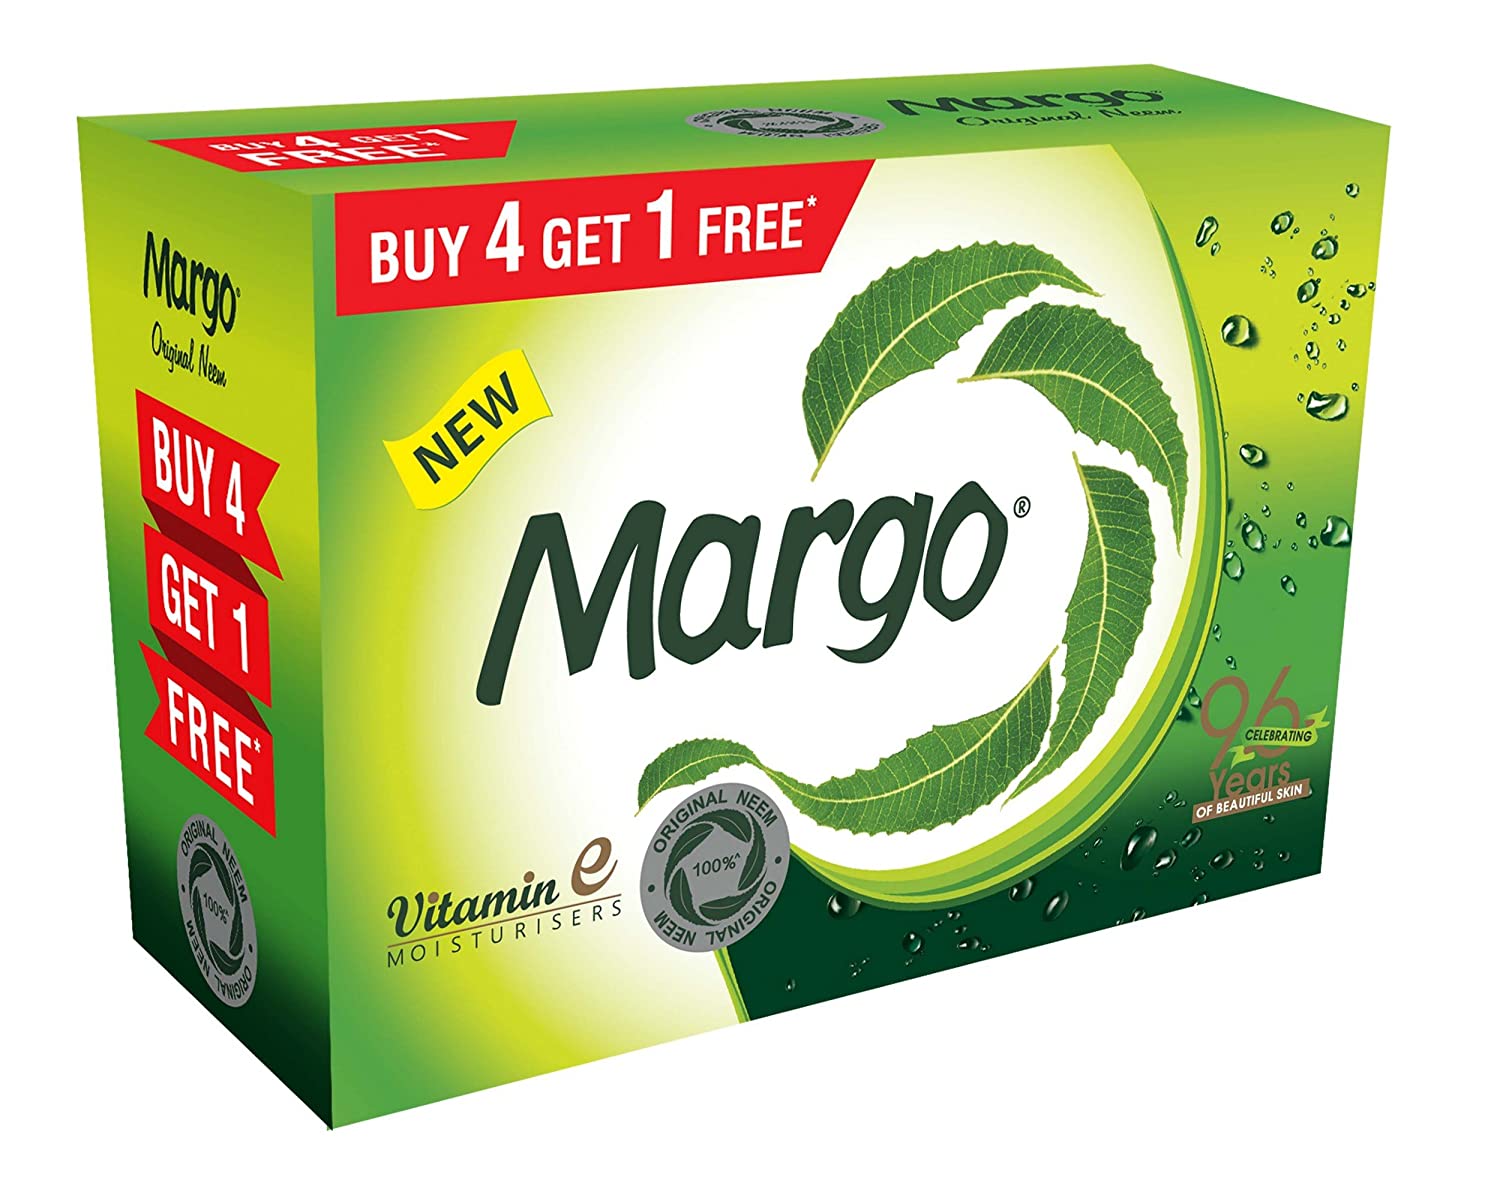 Margo Vitamin E Body Soap - Buy 4 GET 1 FREE